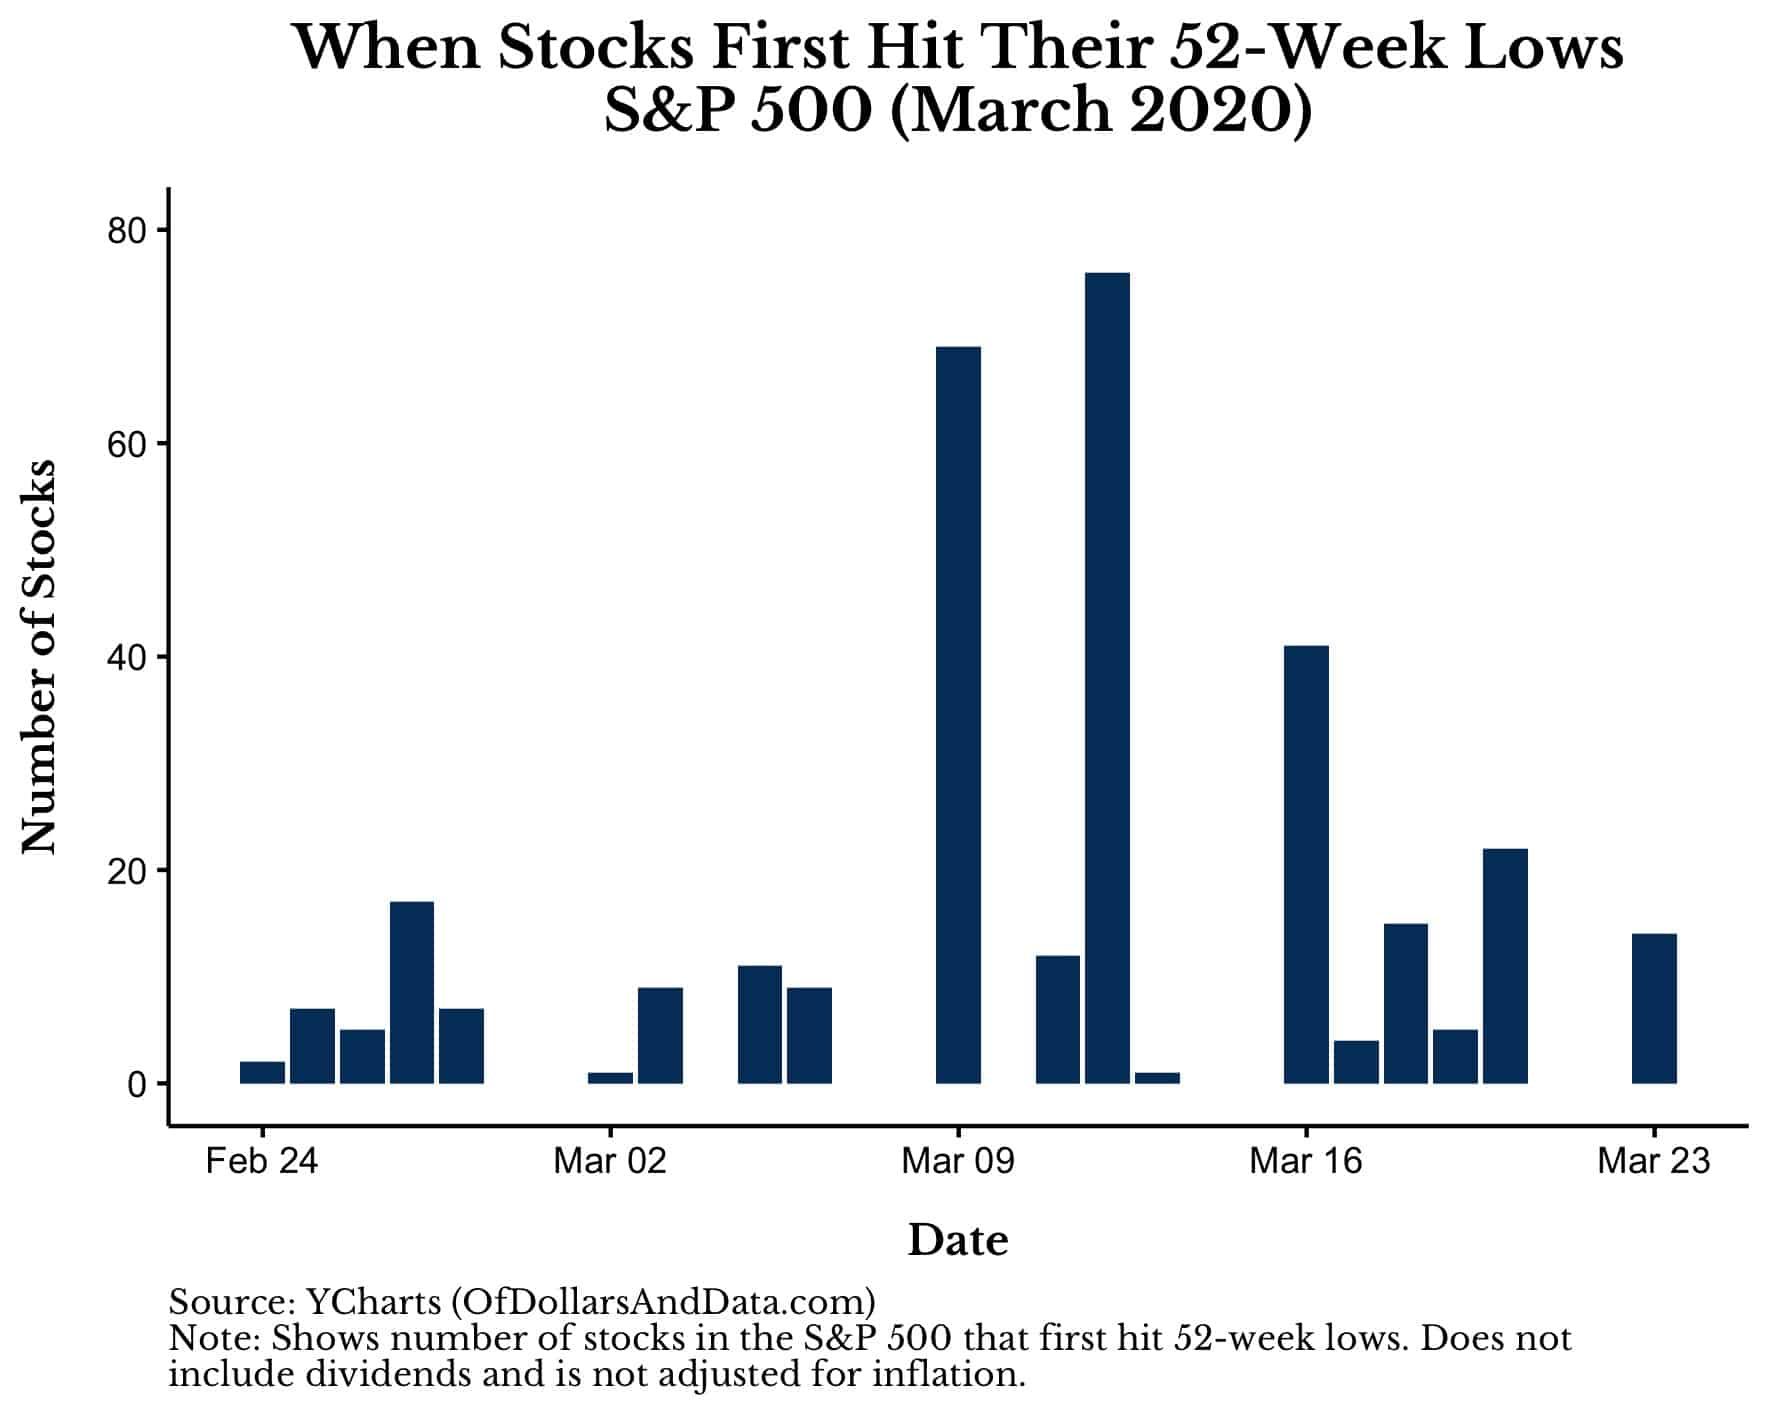 When U.S. stocks first hit their 52-week lows around March 2020